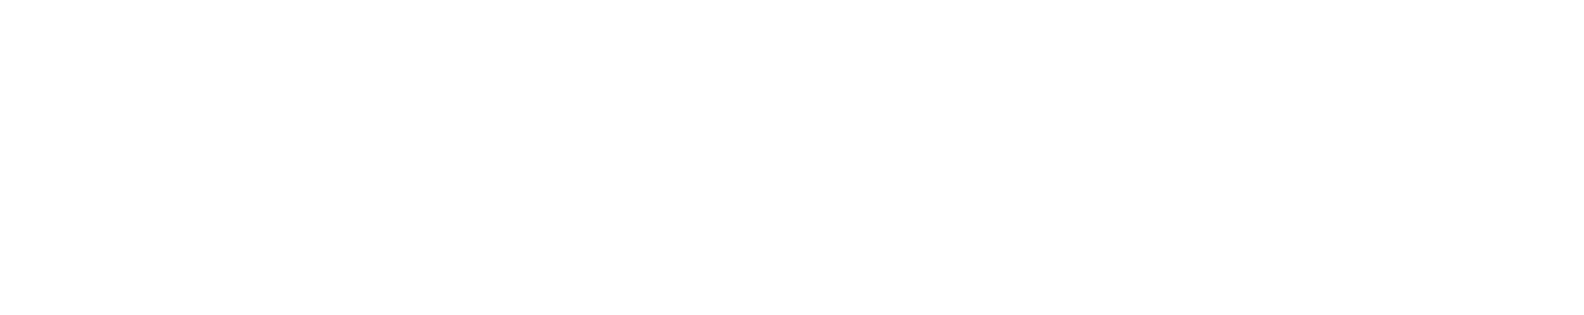 Soho House & Co logo large for dark backgrounds (transparent PNG)